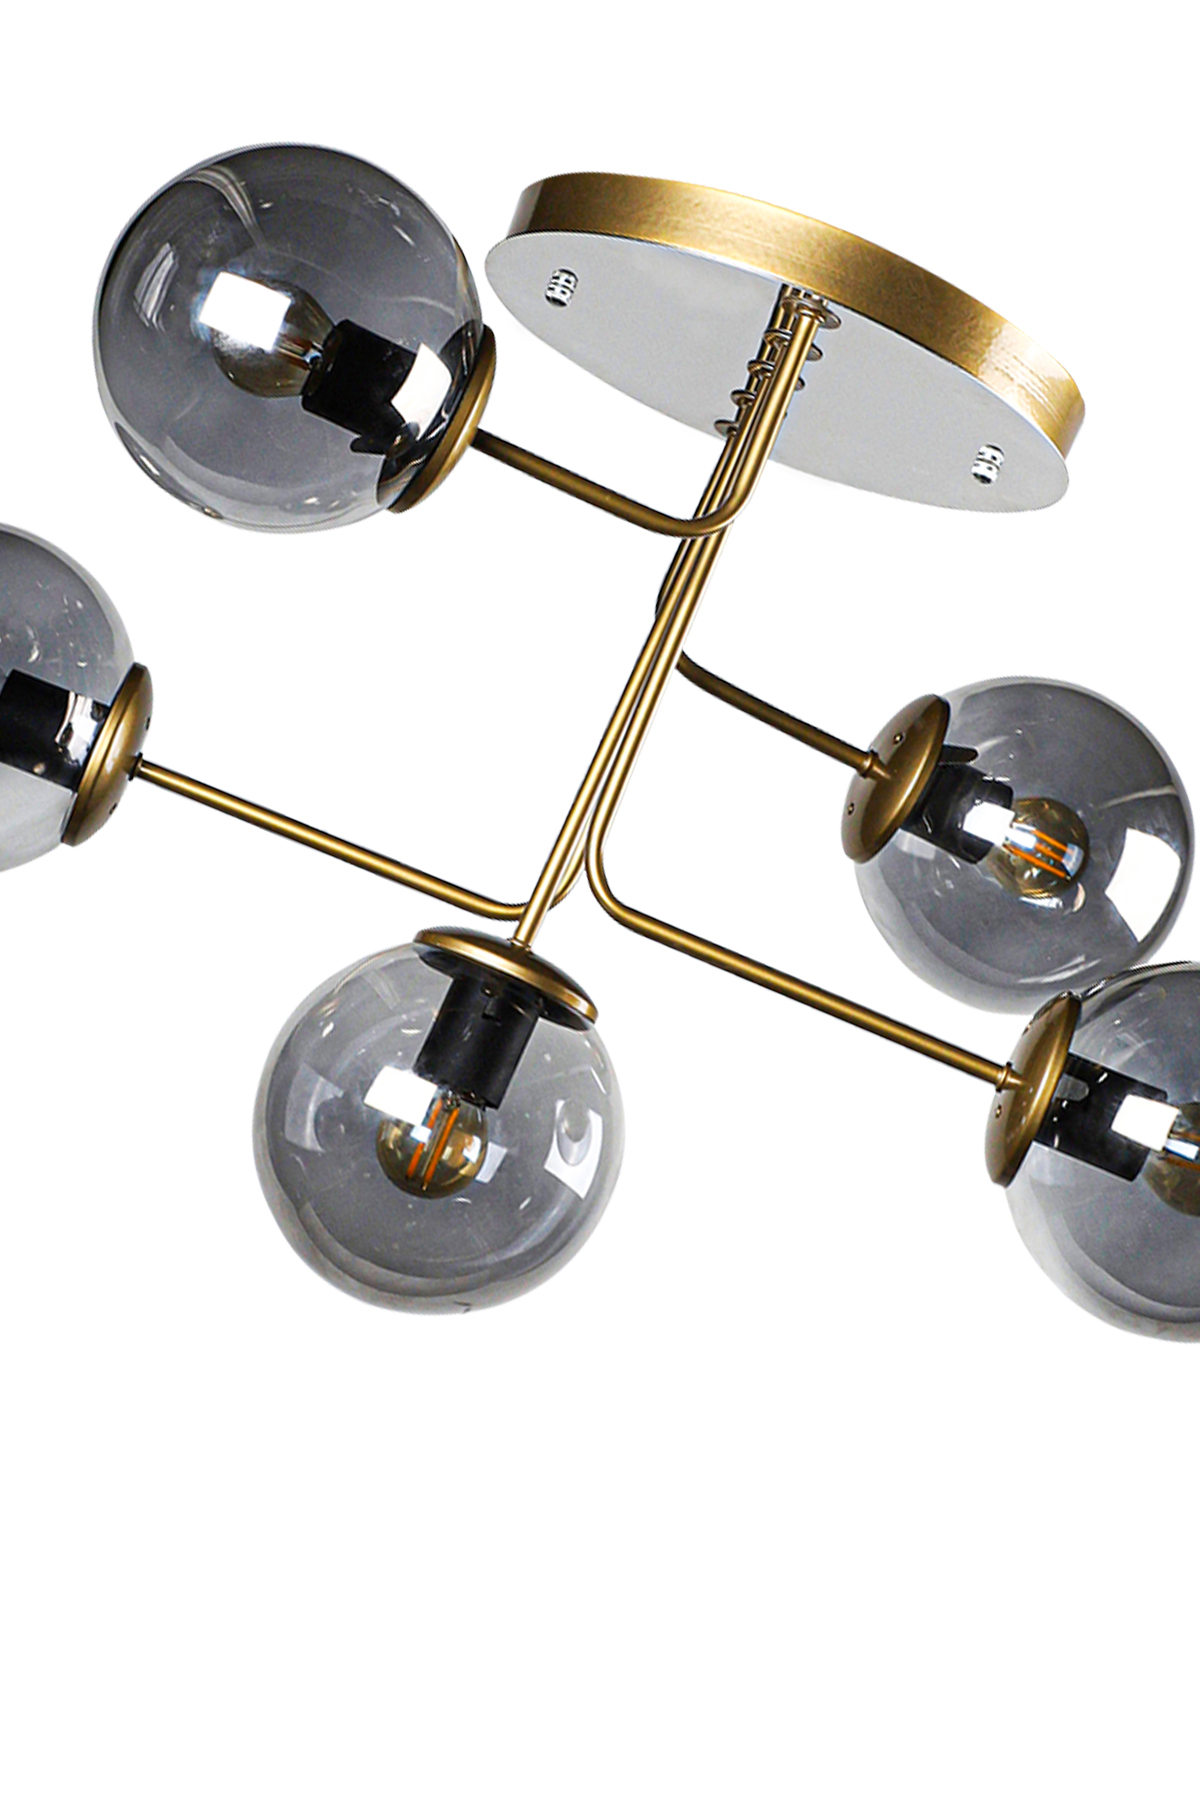 Luxury 5 Ceiling lamp